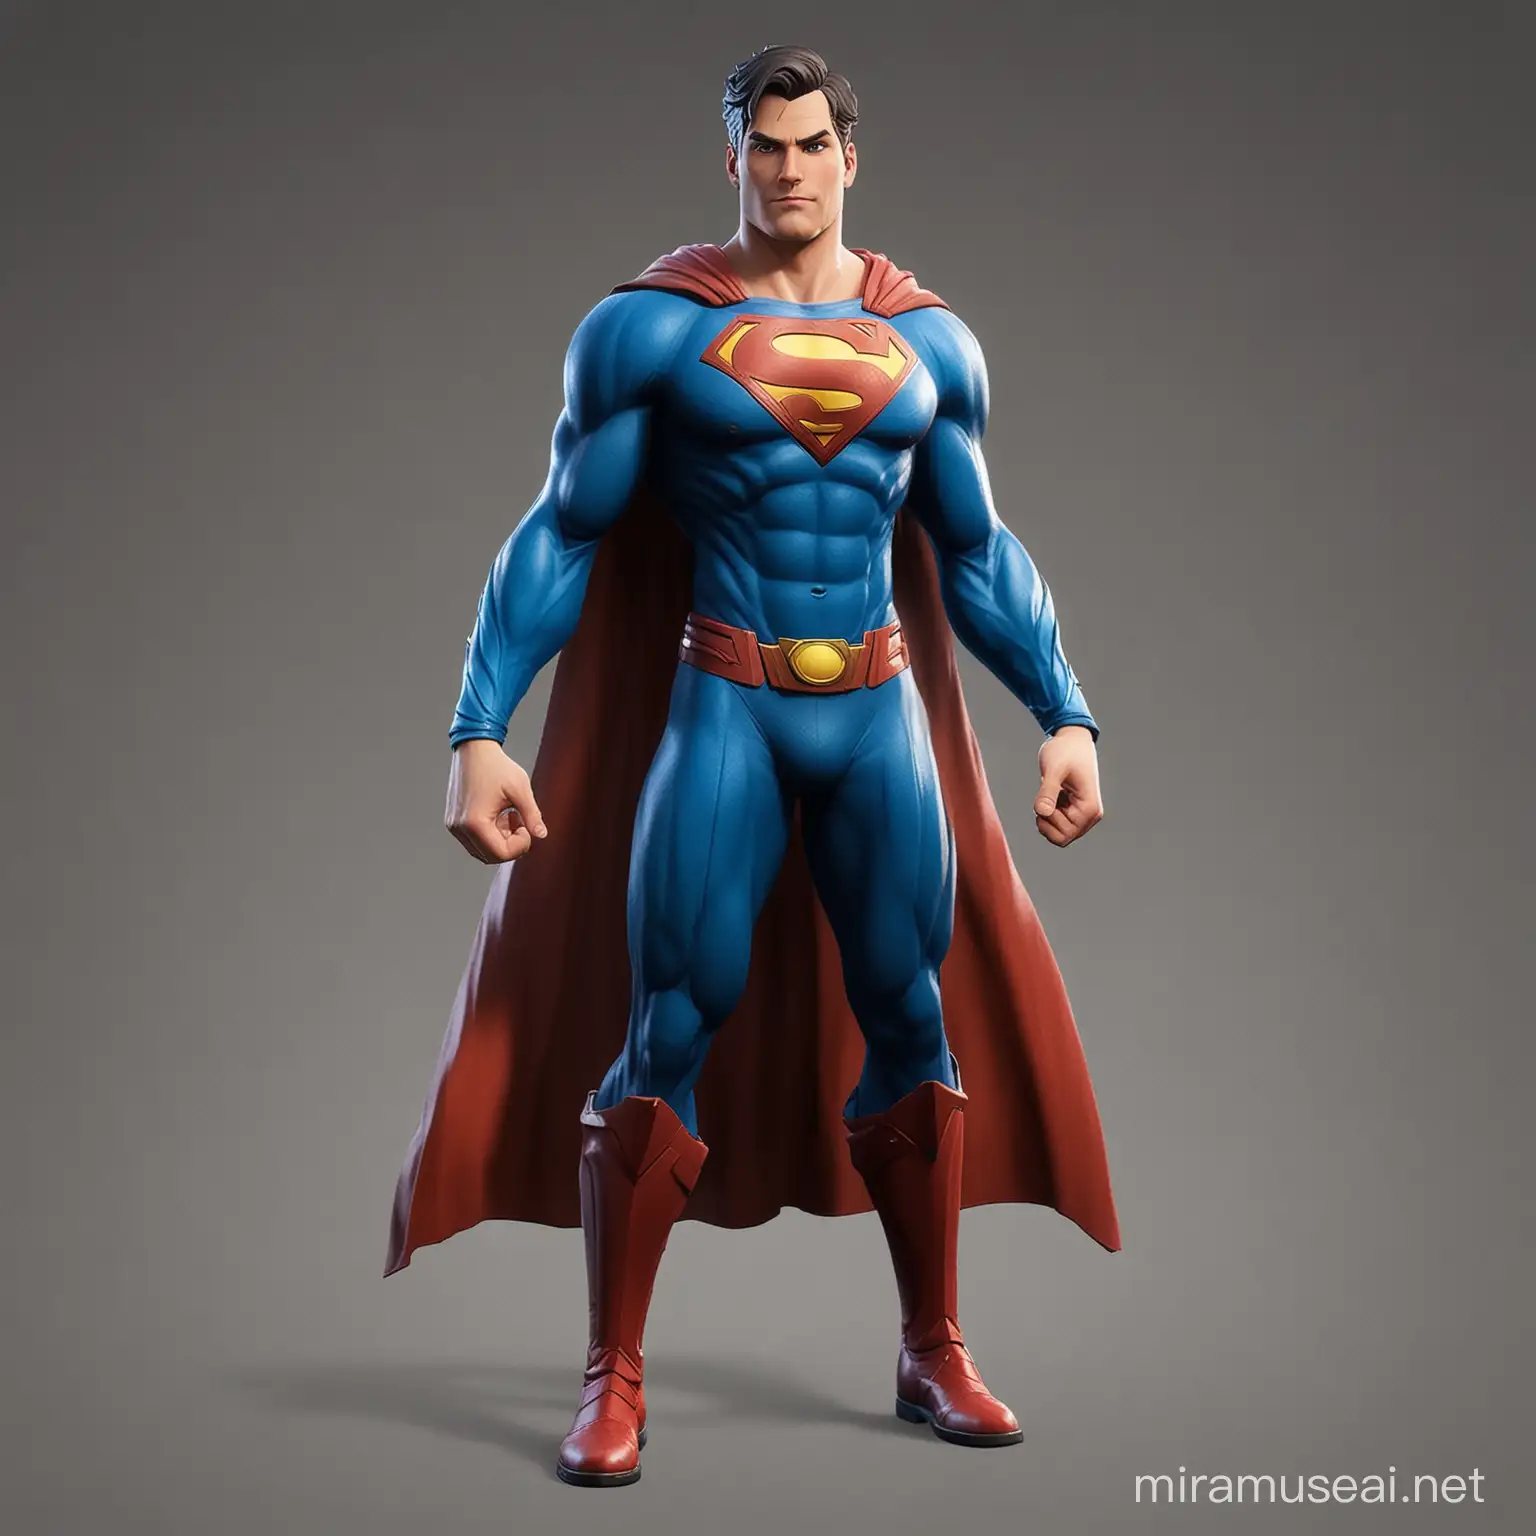 Fortnite Character in Blue Superman Cloak and Dress